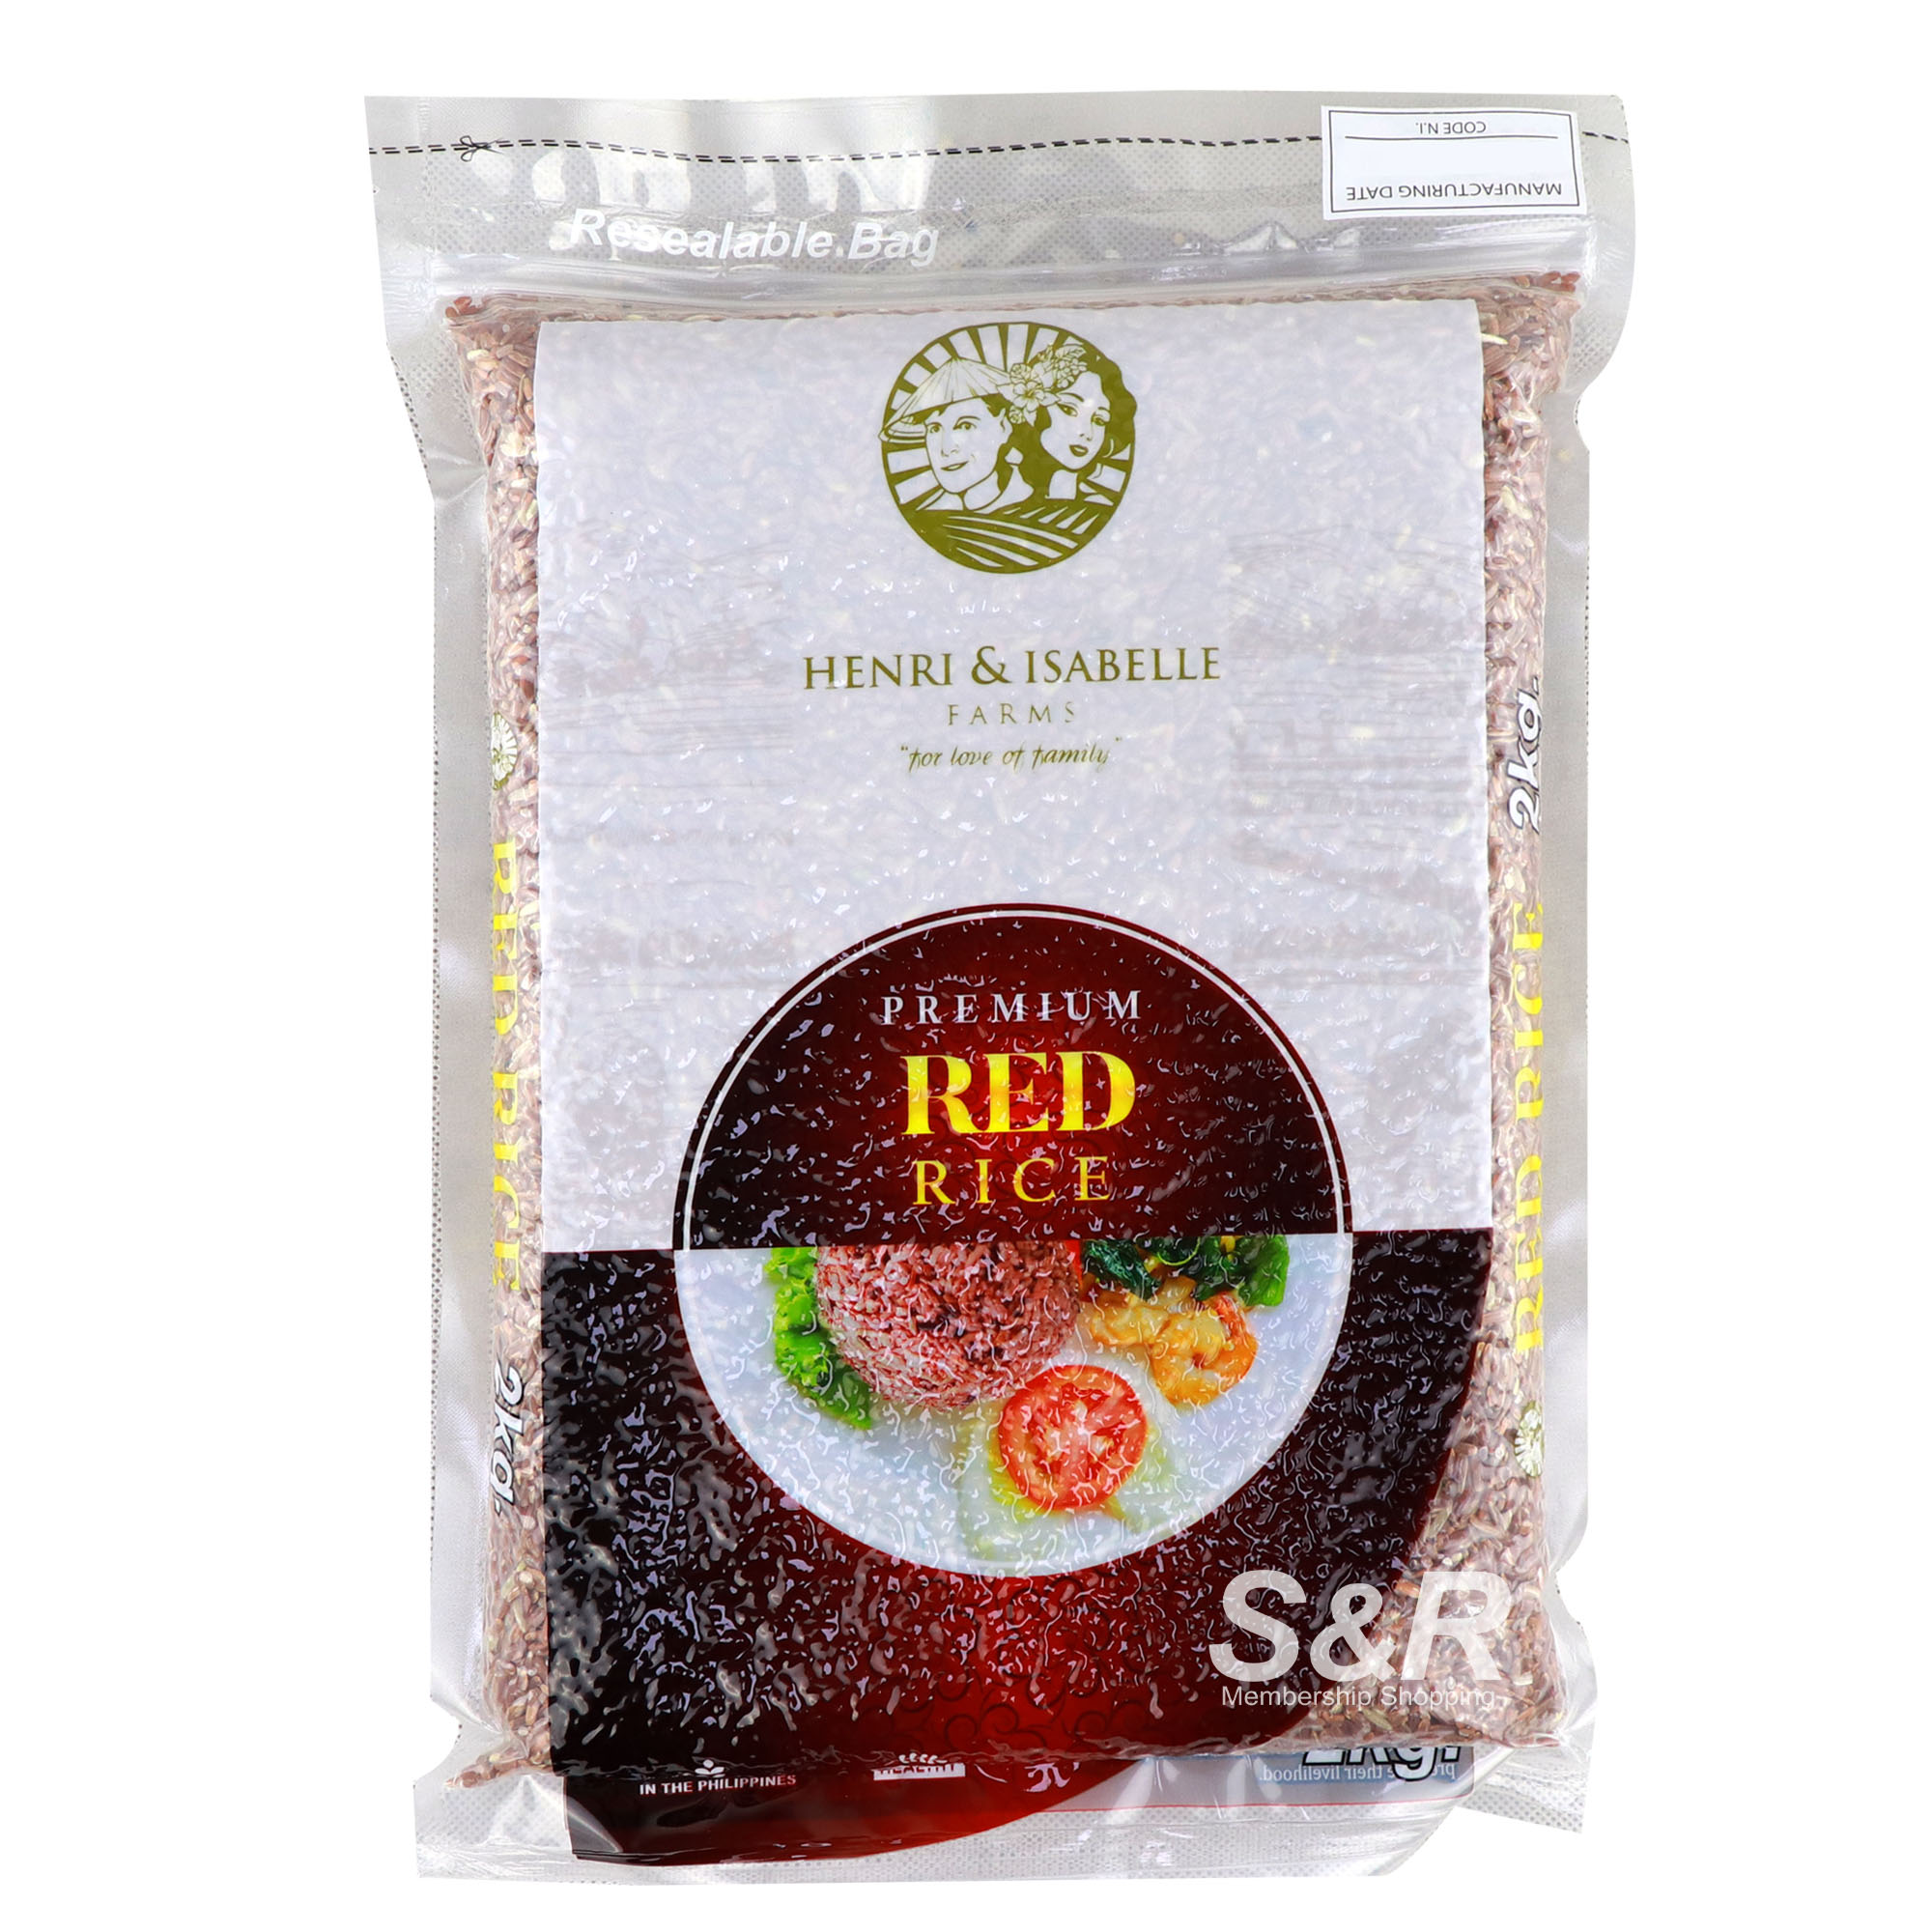 Henri & Isabelle Farms Premium Red Rice 2kg